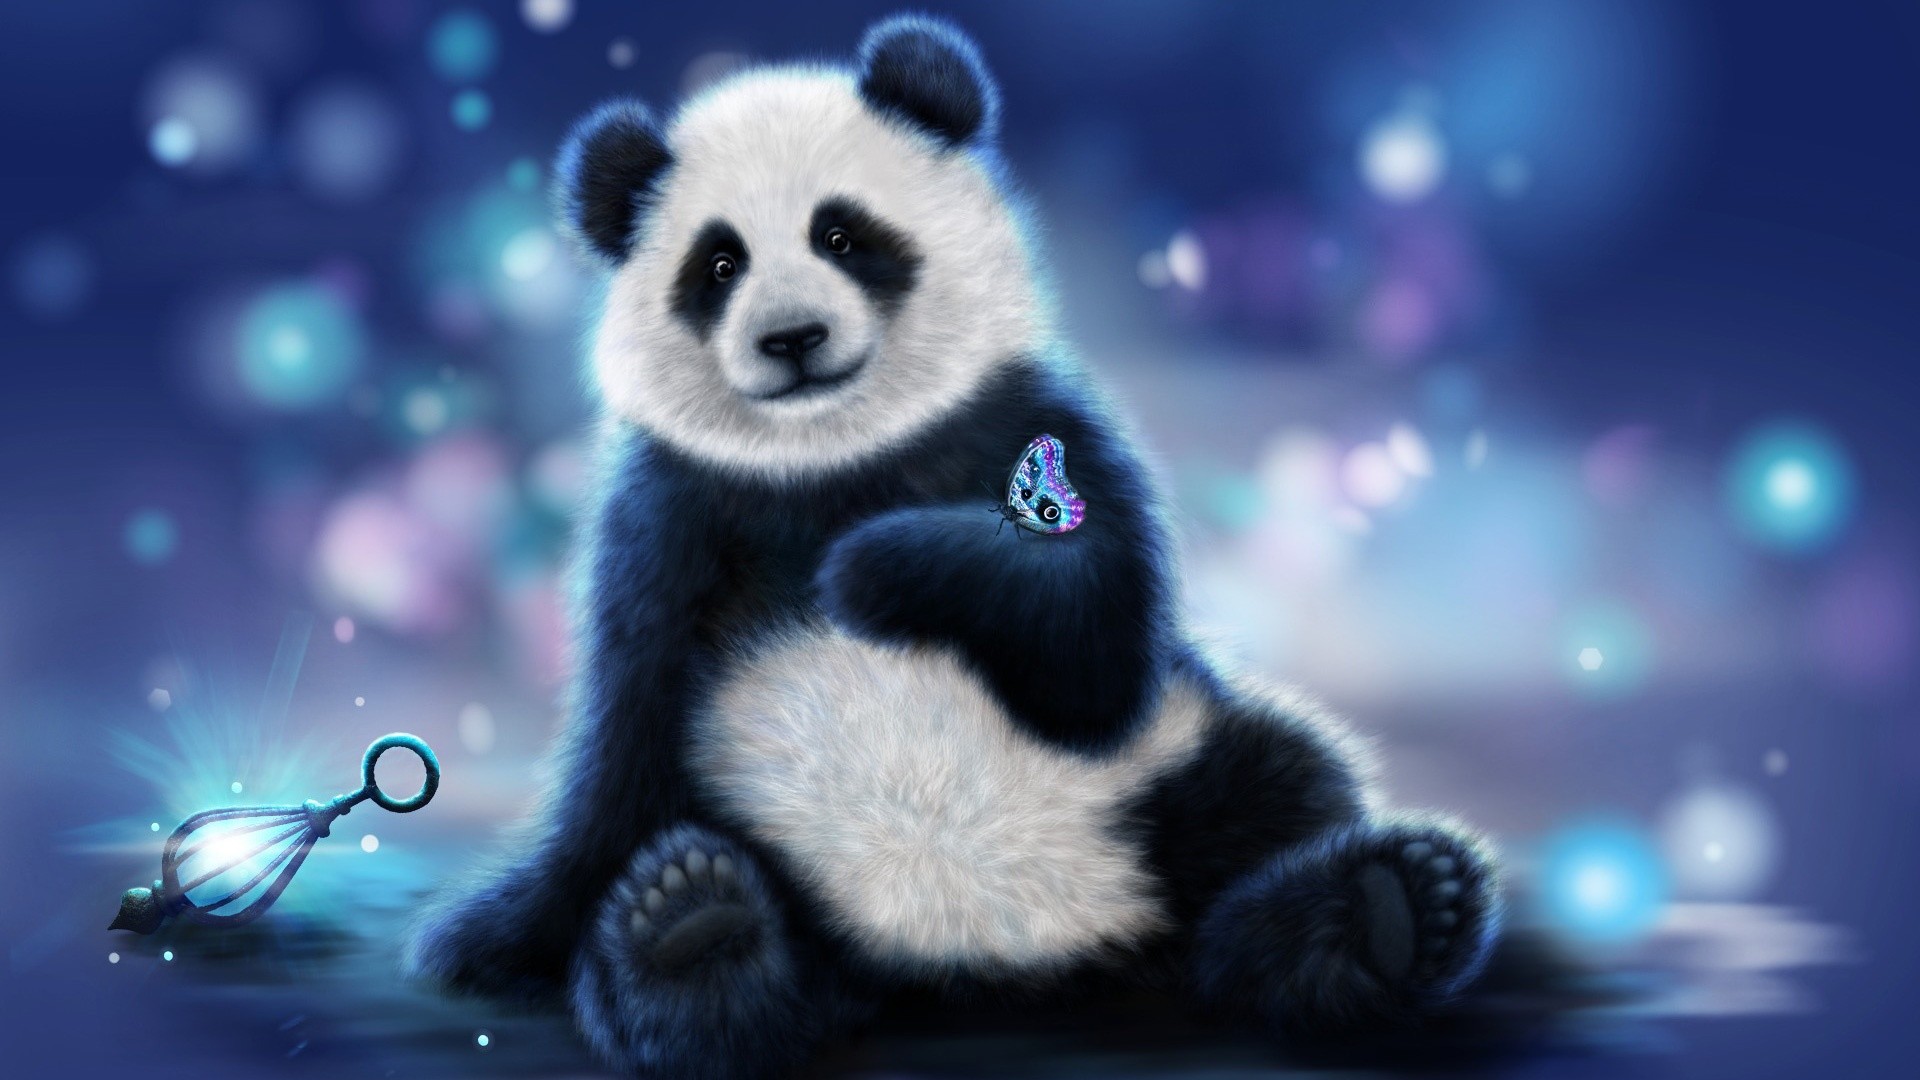 Lovable Panda Bear HD Wallpaper Free Download New HD Wallpapers